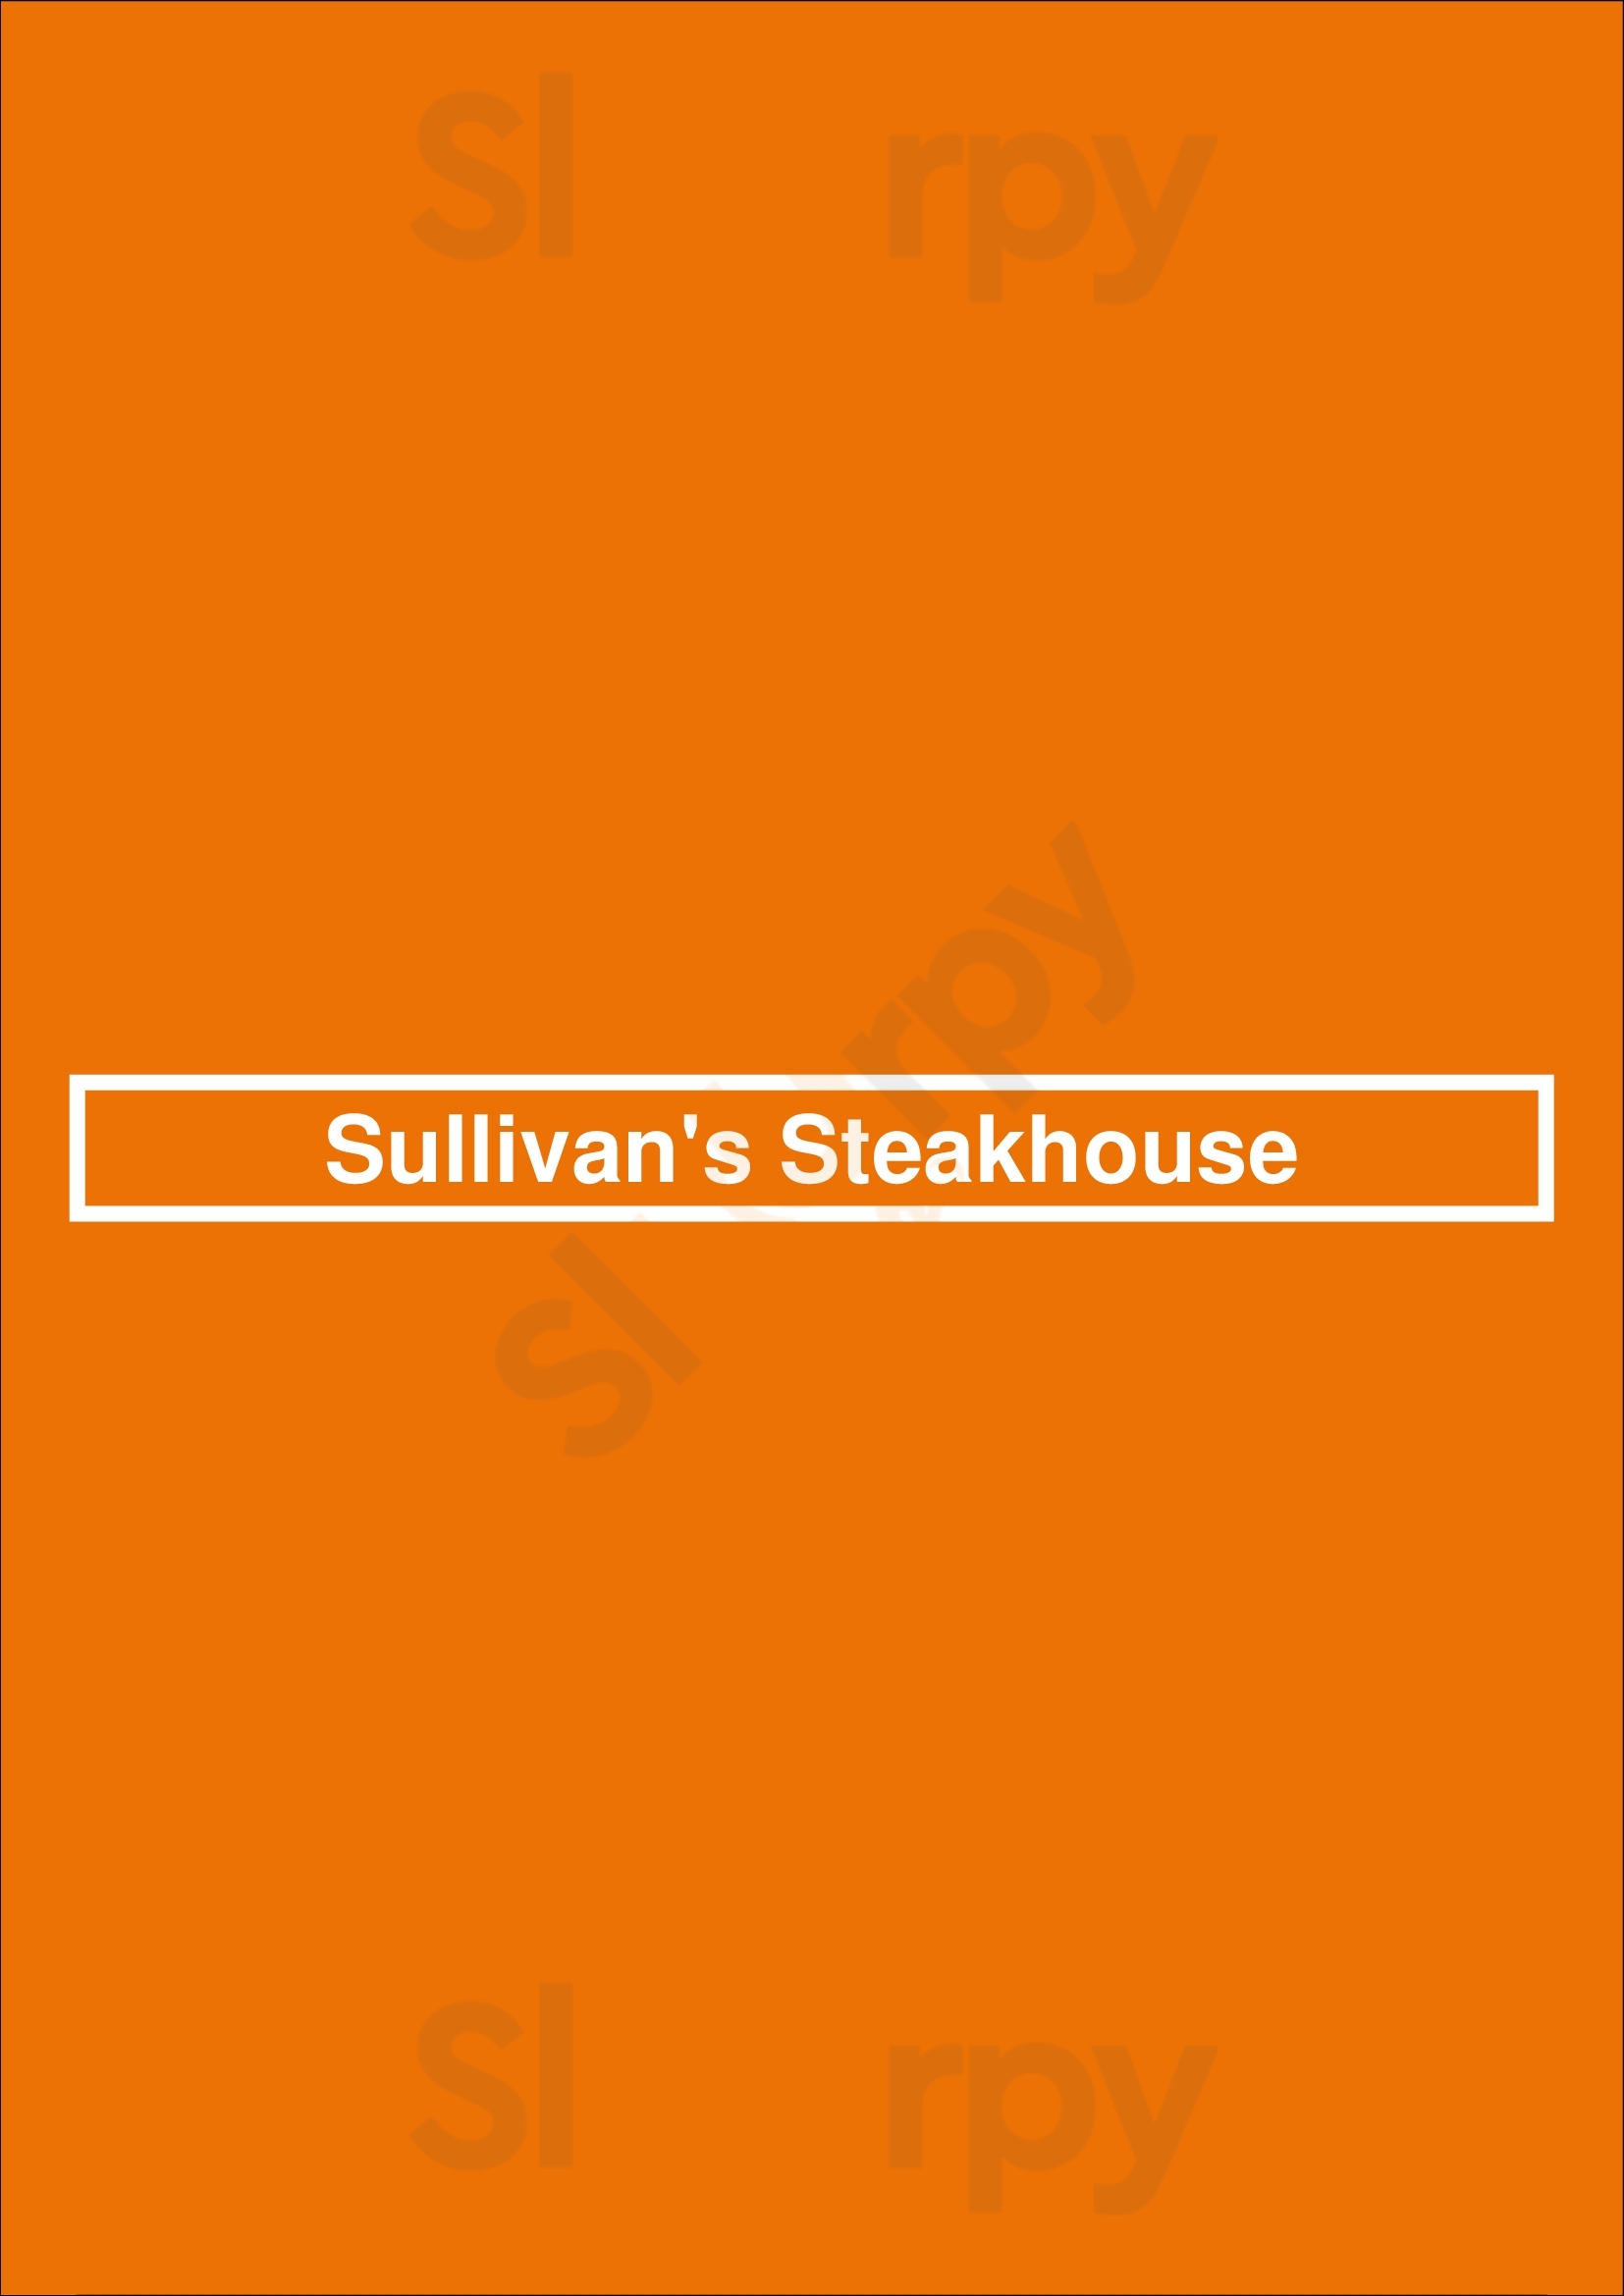 Sullivan's Steakhouse Indianapolis Menu - 1